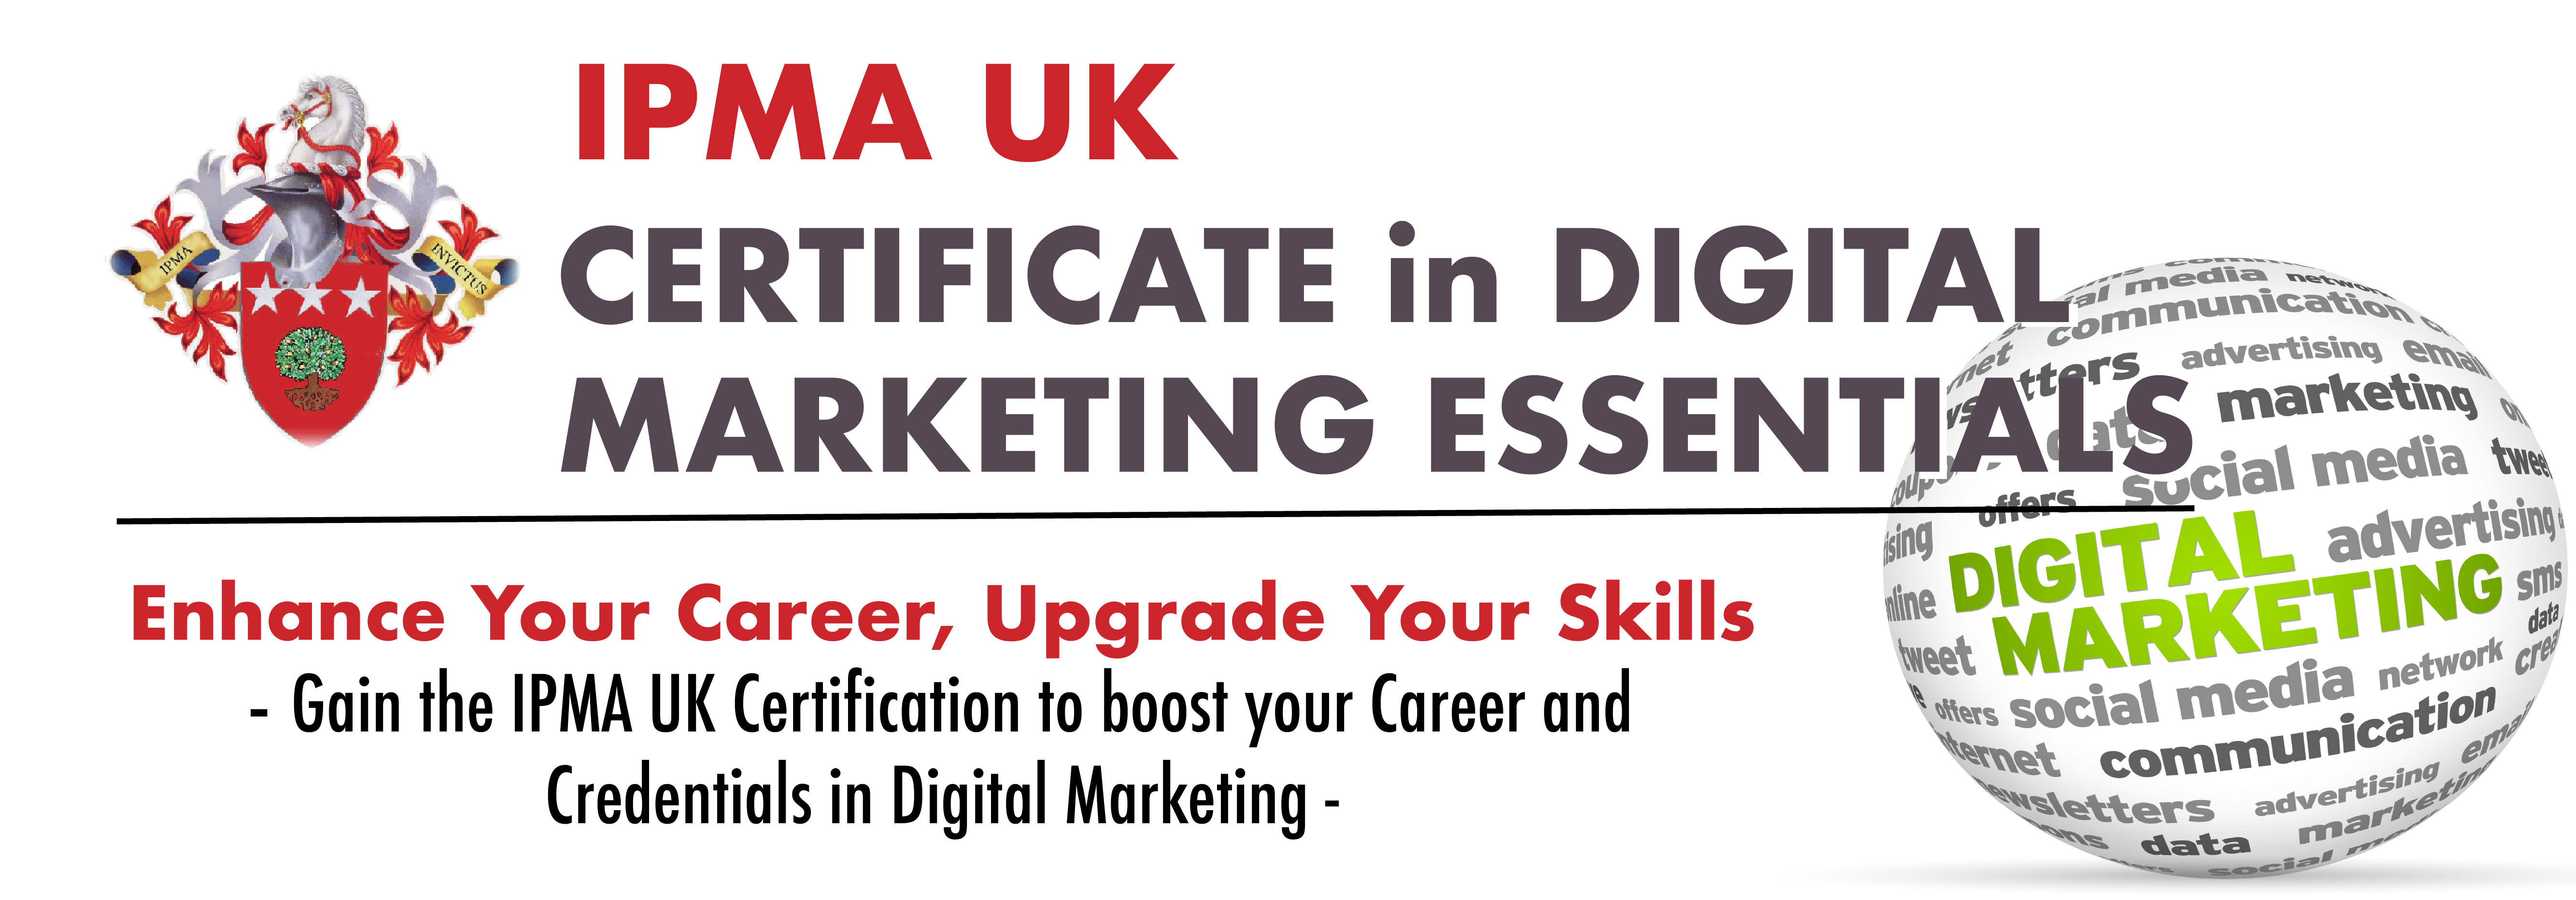 IPMA UK Certificate in Digital Marketing Essentials